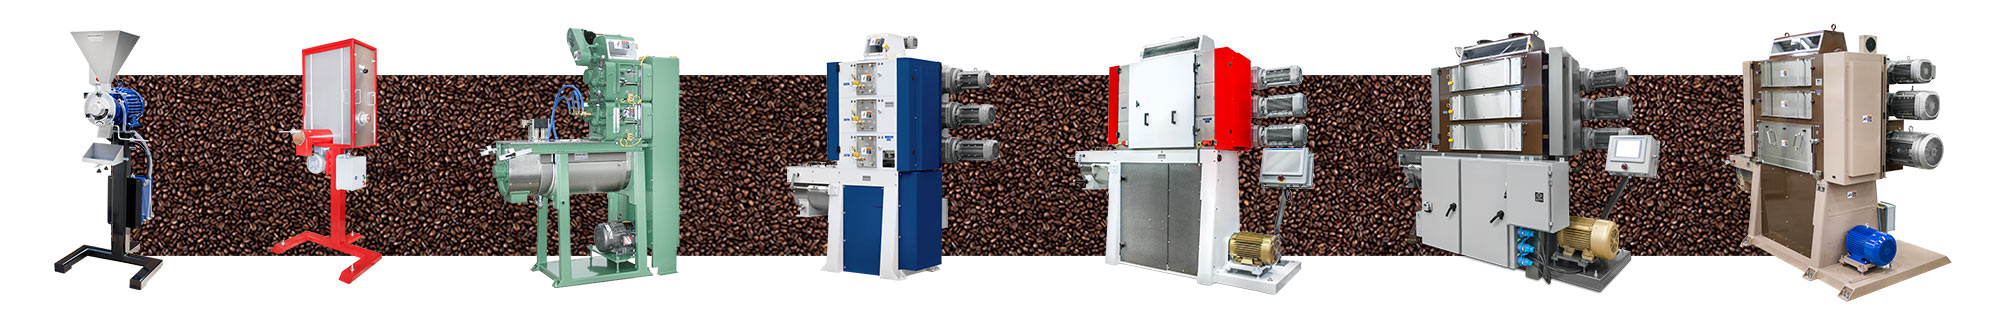 https://www.mpechicago.com/wp-content/uploads/2019/12/Evolution-of-Coffee-Grinder2000px_1-3.jpg